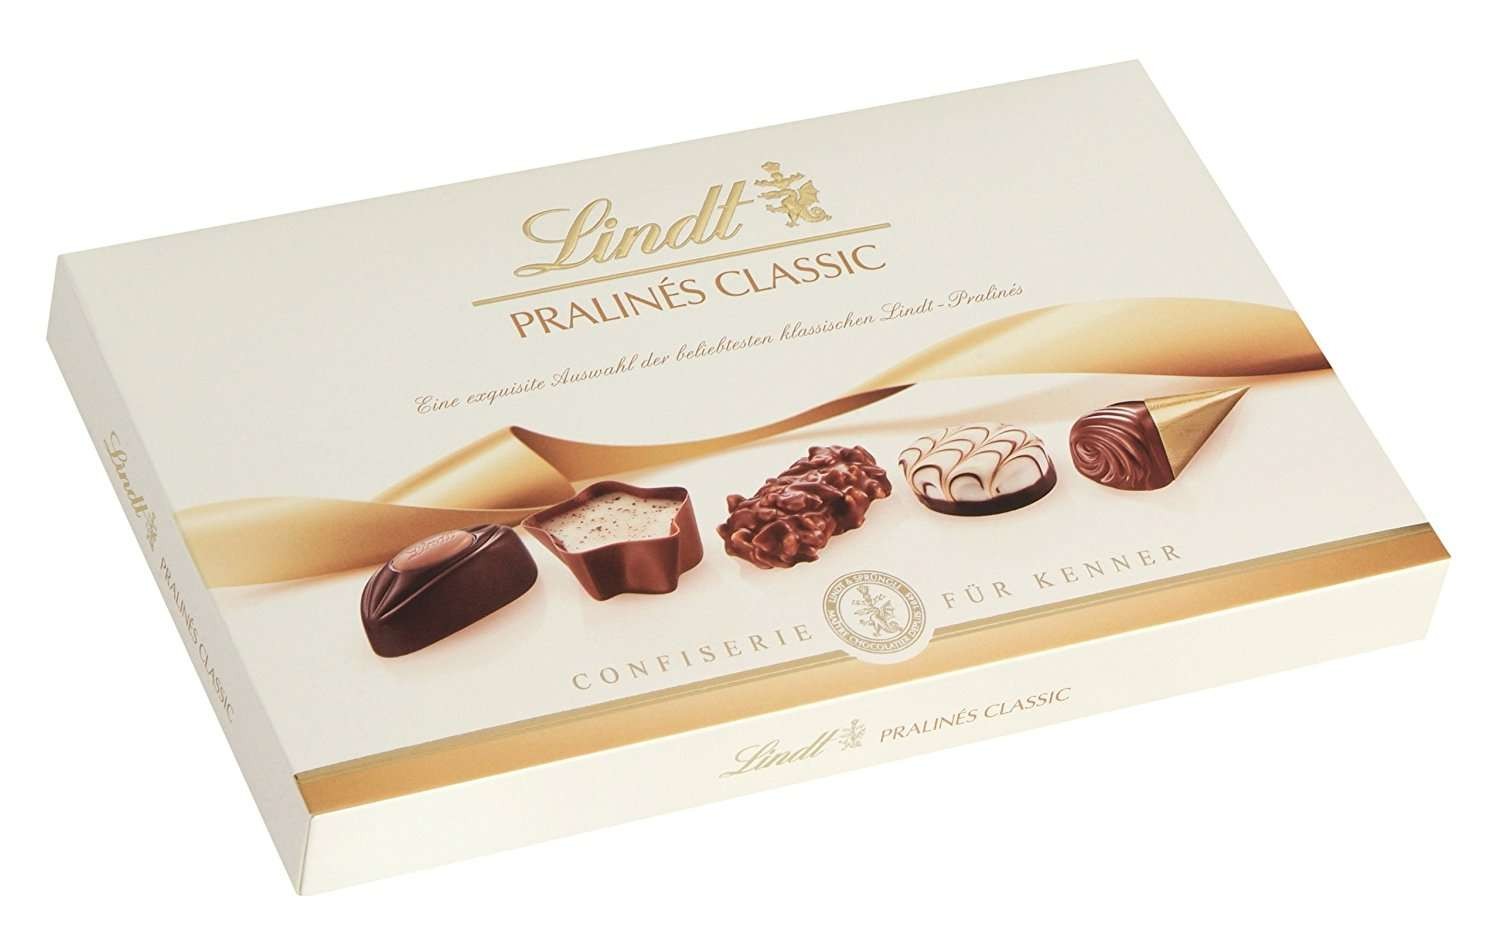 Набор пралине. Шоколад Lindt Pralines Classic. Шоколадные конфеты пралине Линд. Шоколадные пралине конфеты Линдор. Pralines шоколадные конфеты 200г.